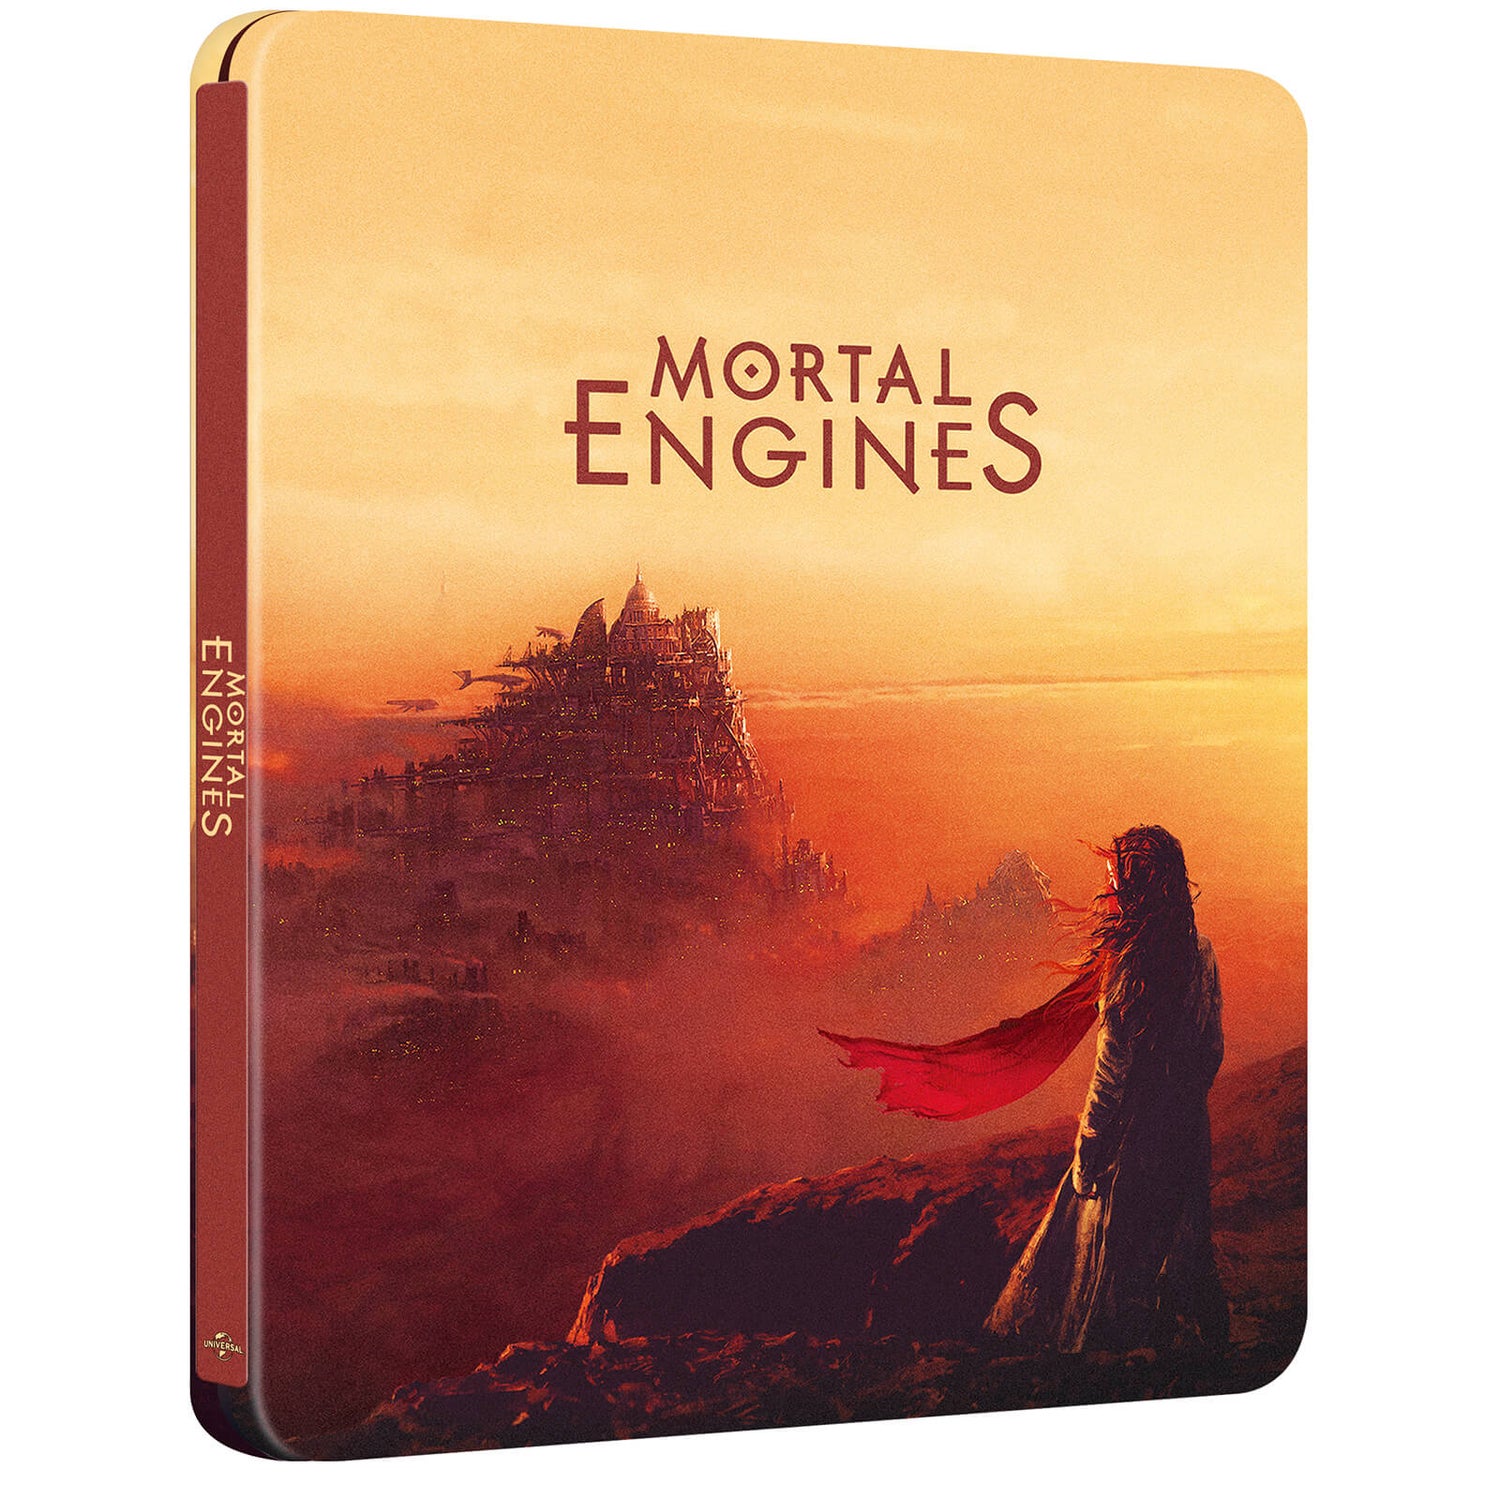 Mortal Engines - 4K Ultra HD Steelbook (Includes Blu-ray)